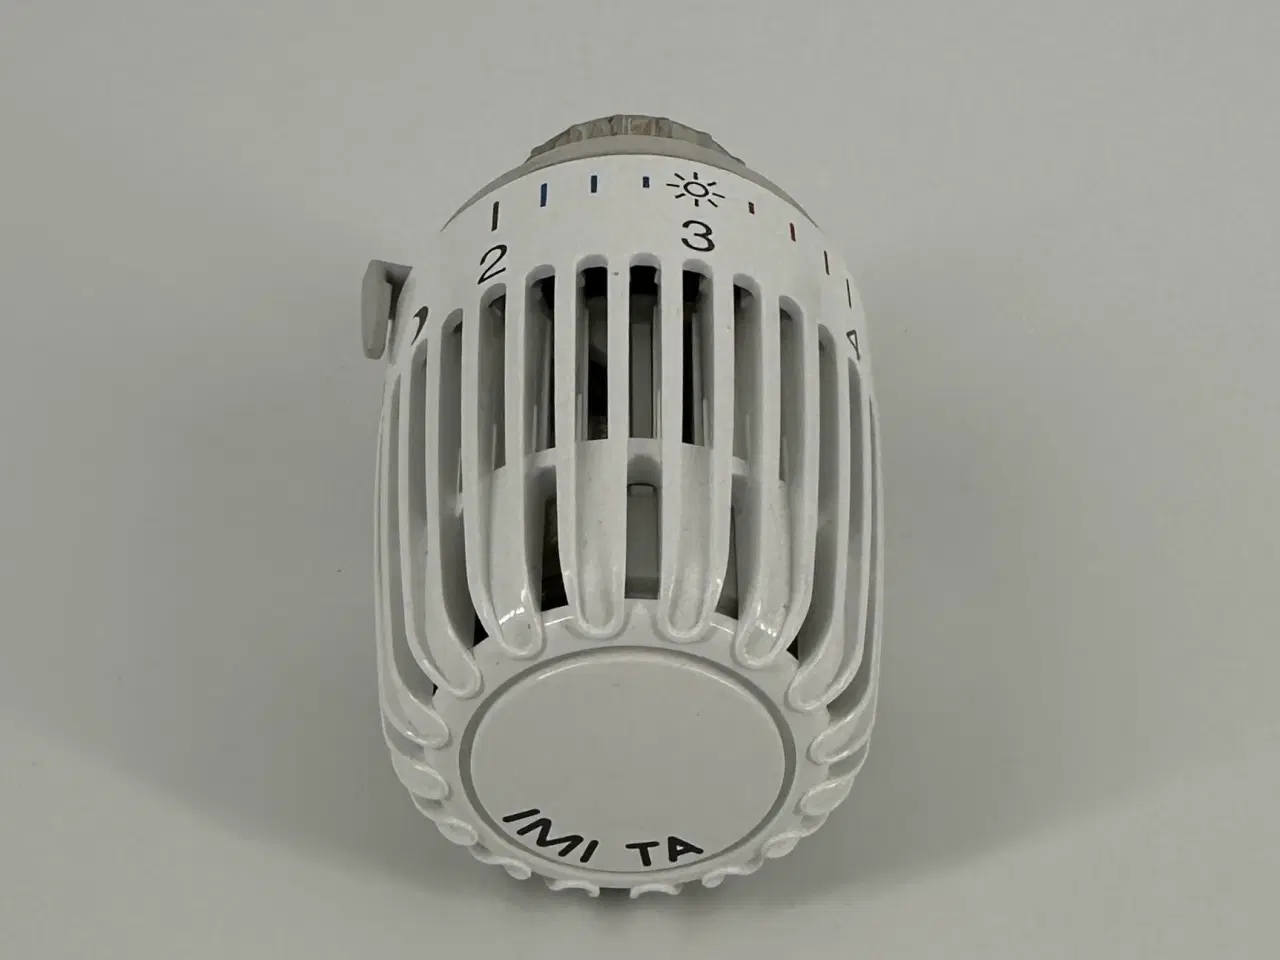 Billede 3 - Imi ta radiator termostat, hvid